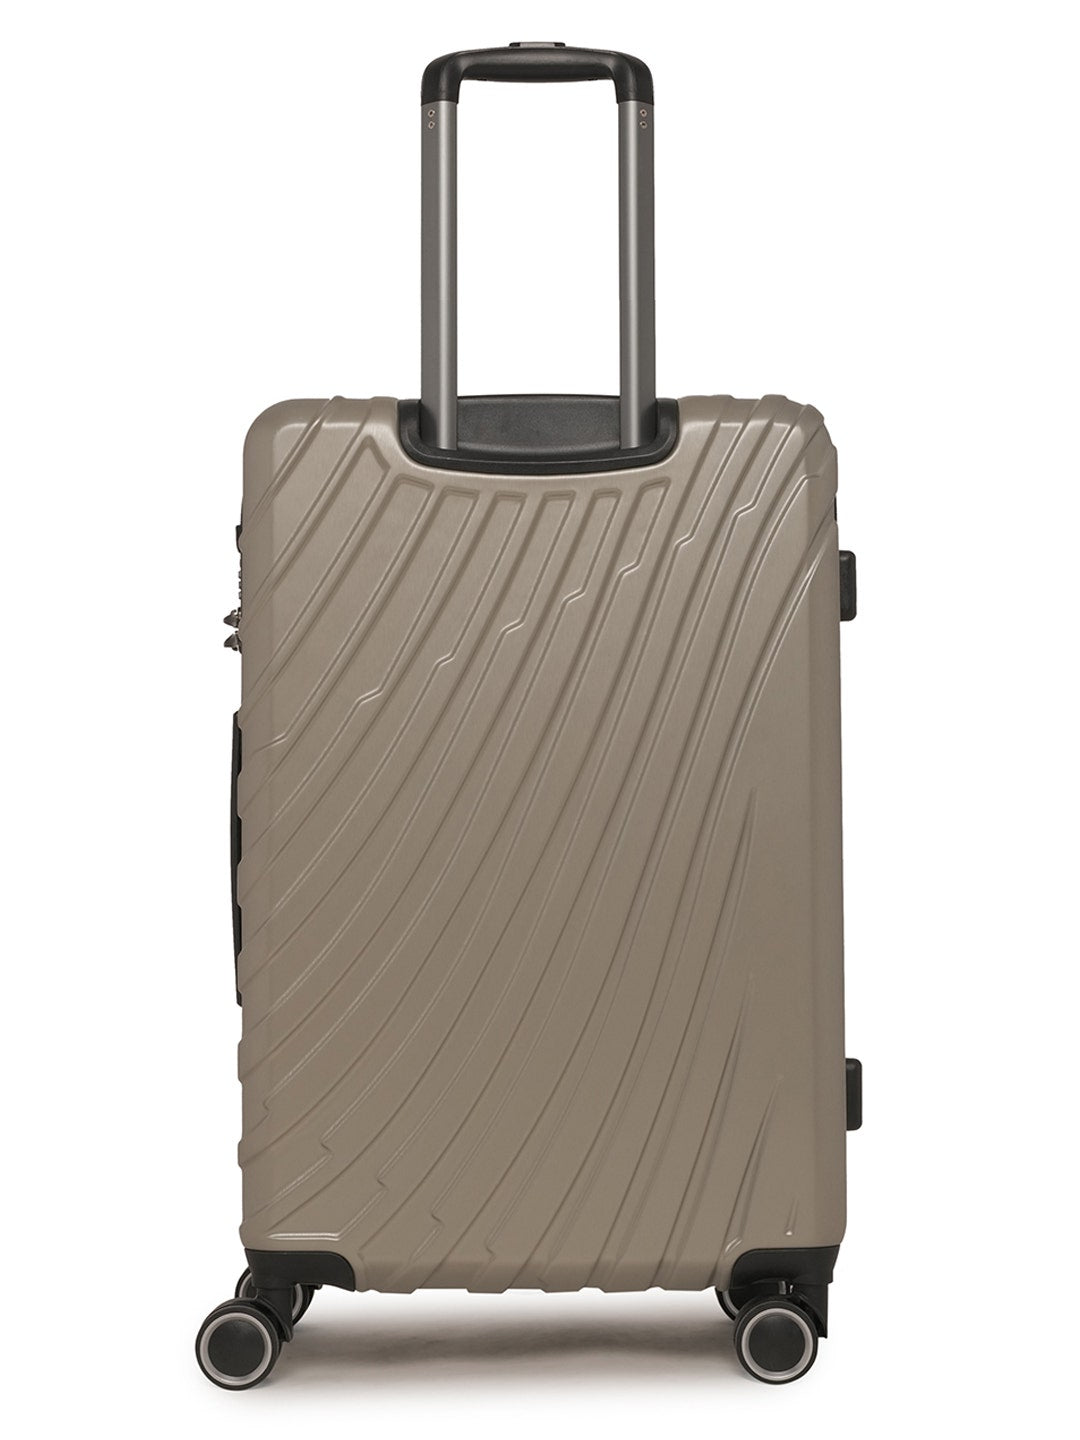 Wildcraft Zephyr Hard Trolley Suitcase (12836)